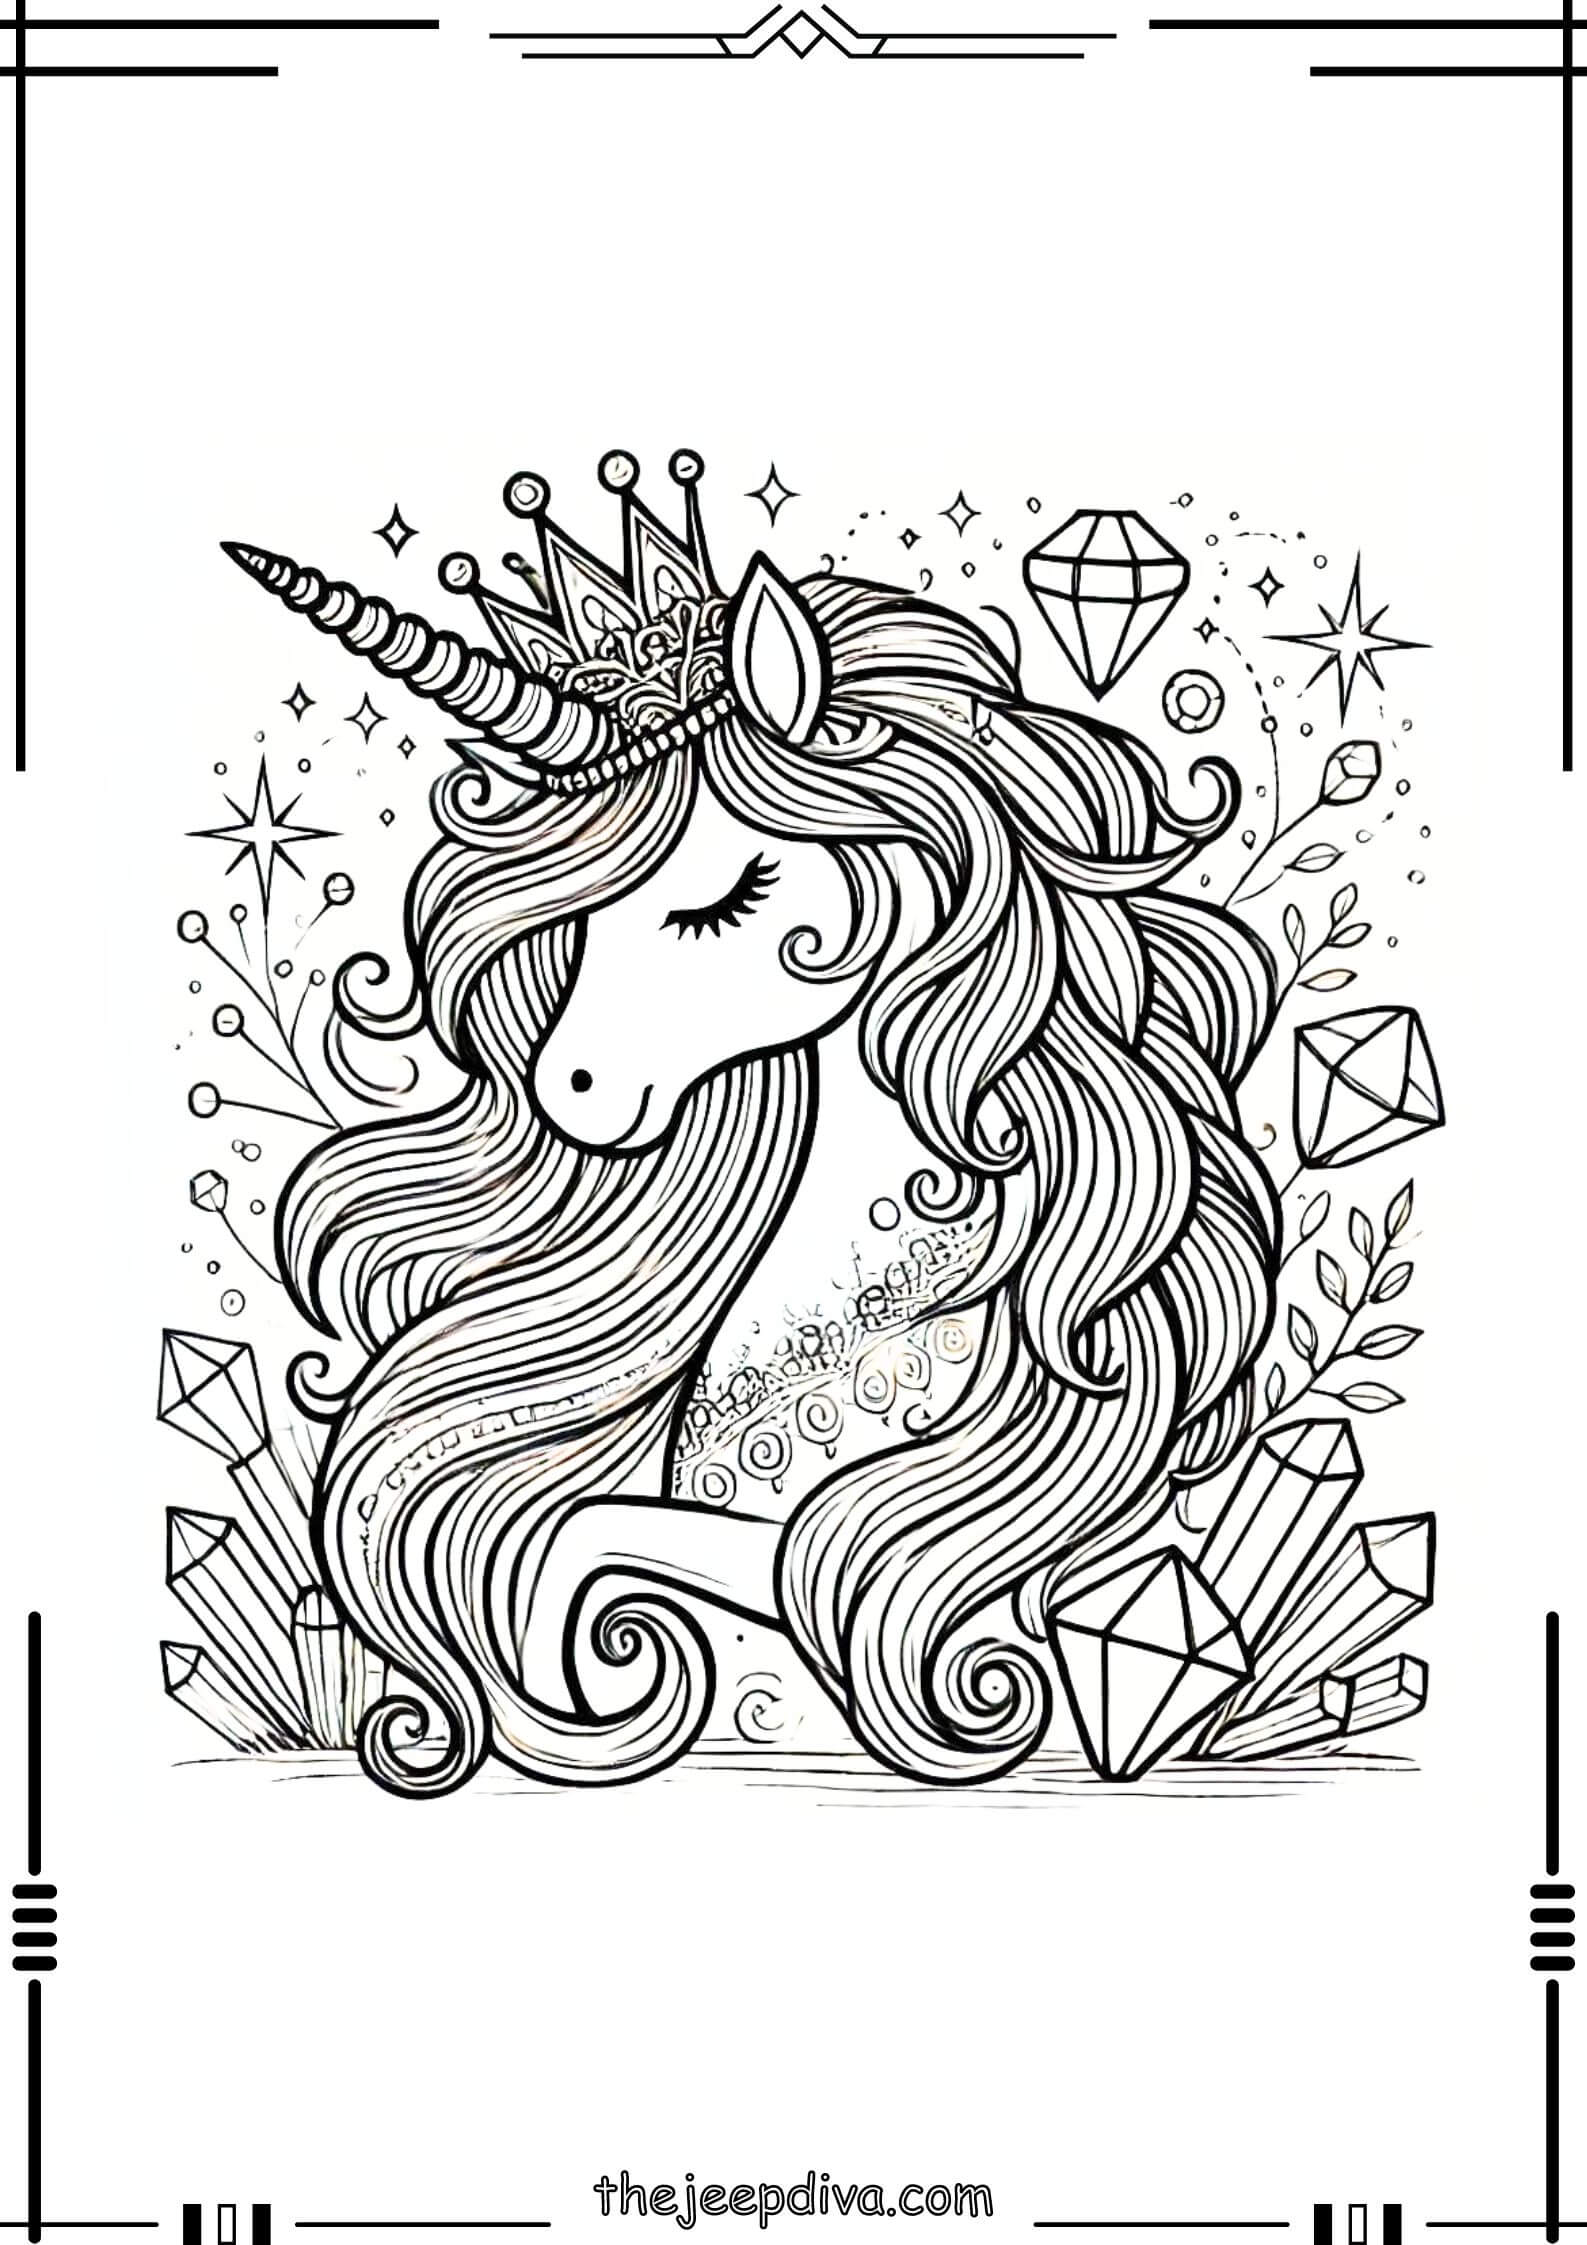 unicorn-coloring-page-hard-22